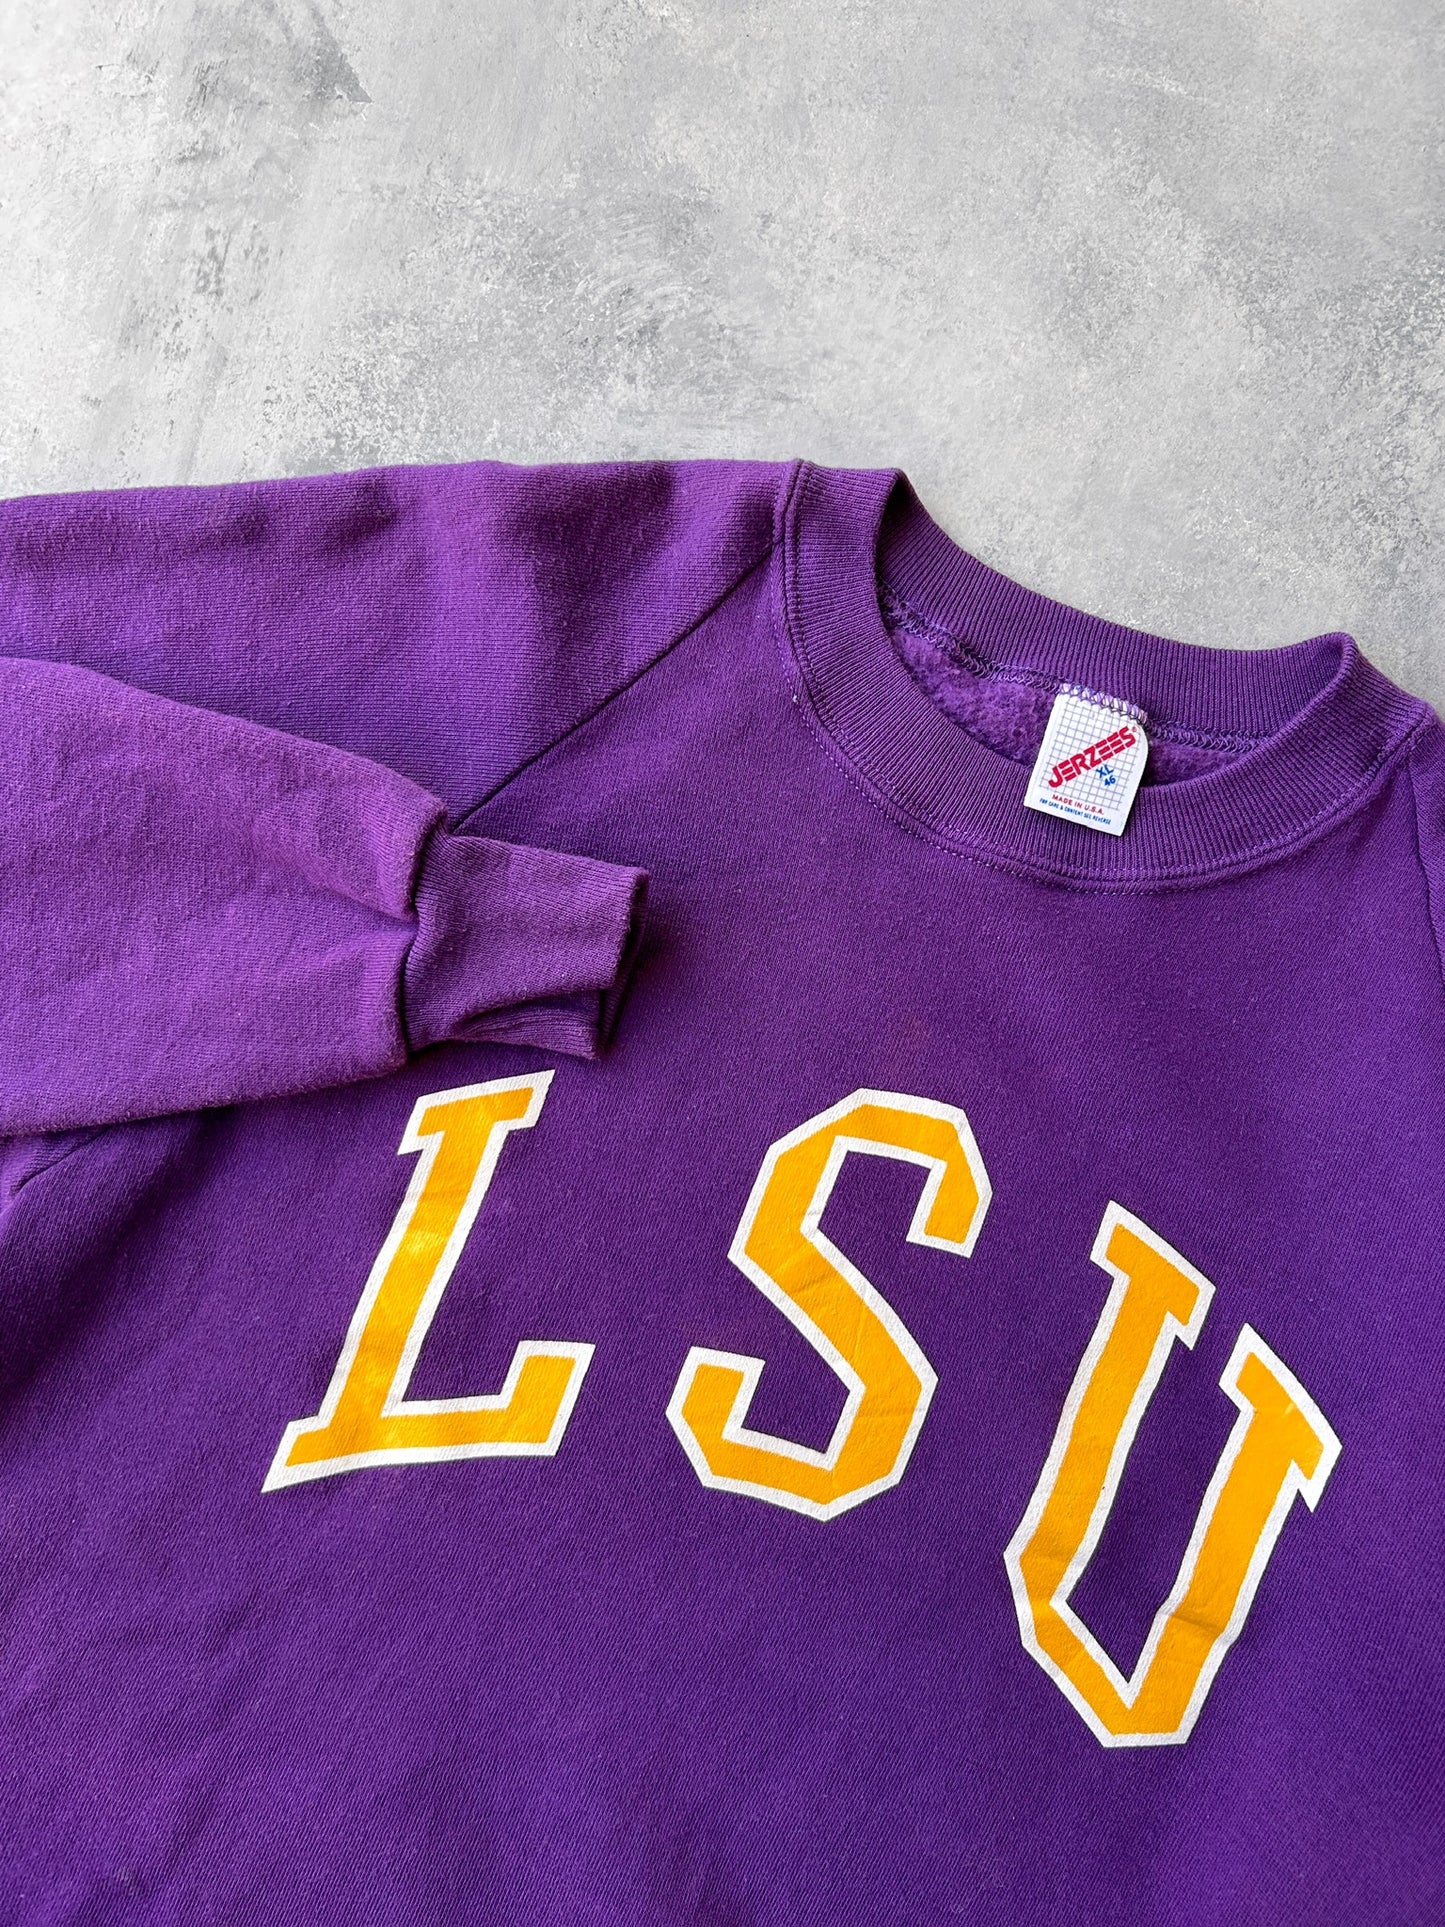 Louisiana State University Sweatshirt 80's - Large